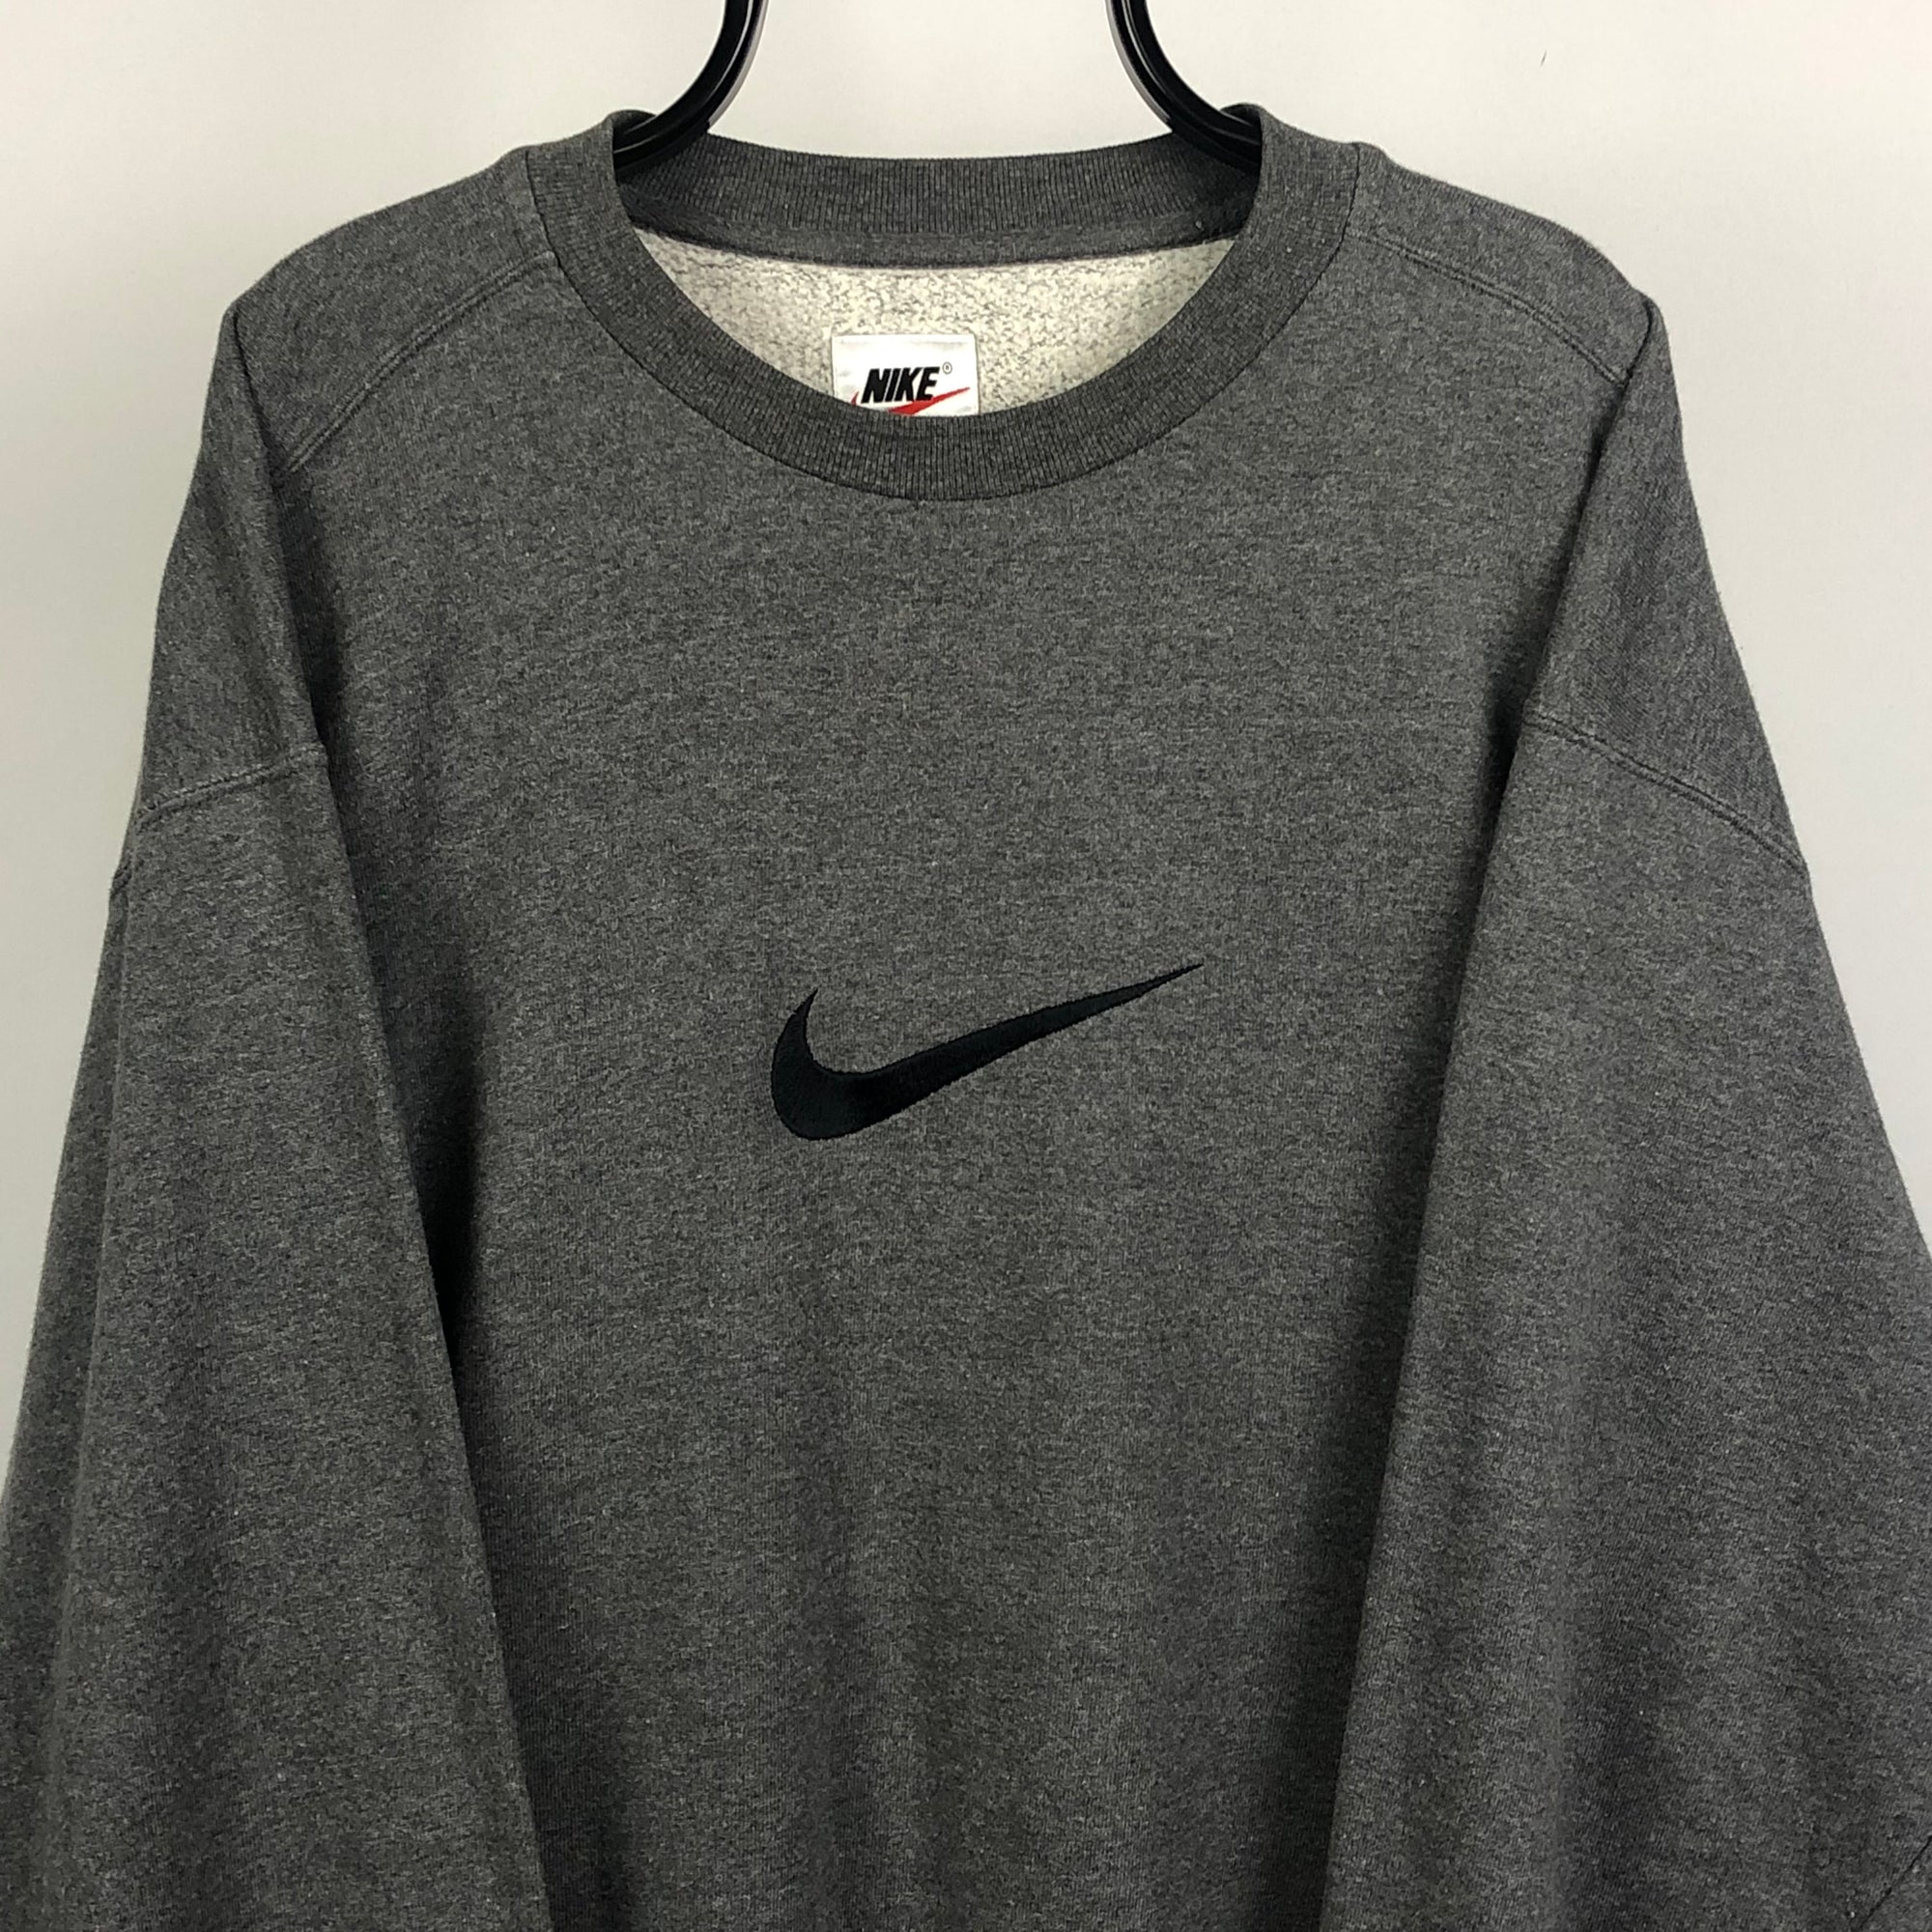 90s Nike Embroidered Swoosh Sweatshirt in Dark Grey - Men's XL/Women's XXL